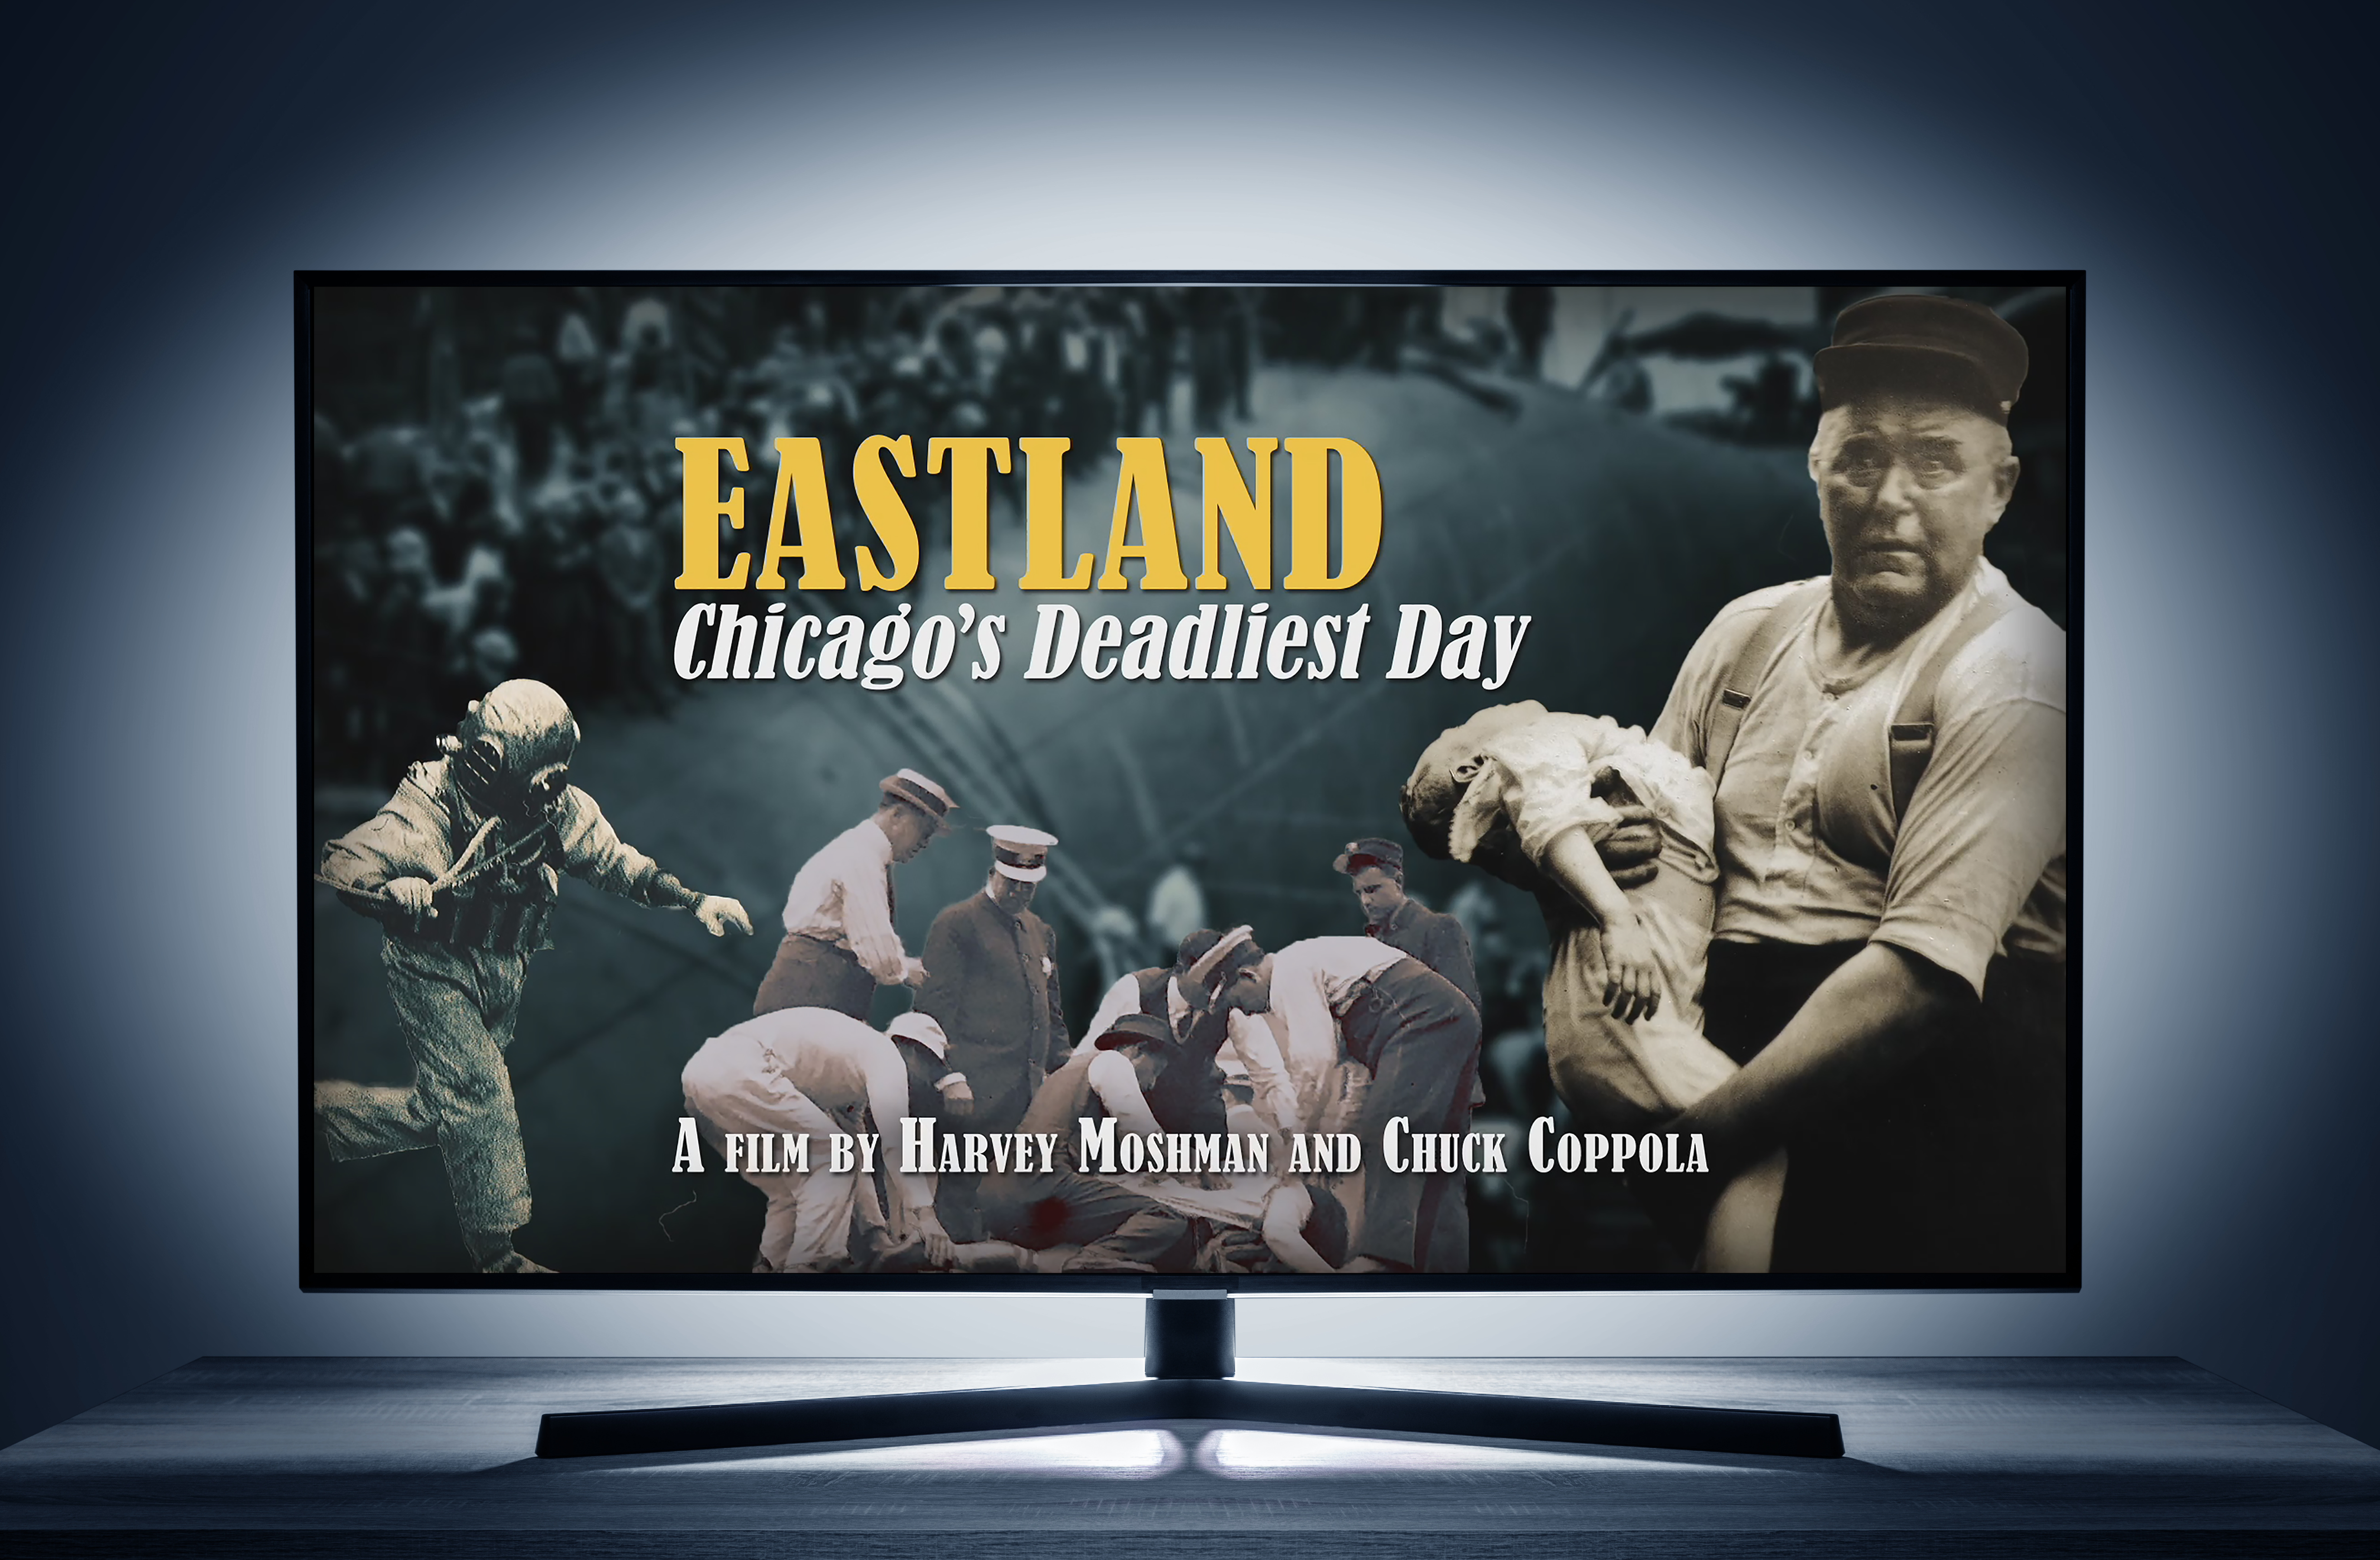 Eastland: Chicago's Deadliest Day DVD - 83 mins